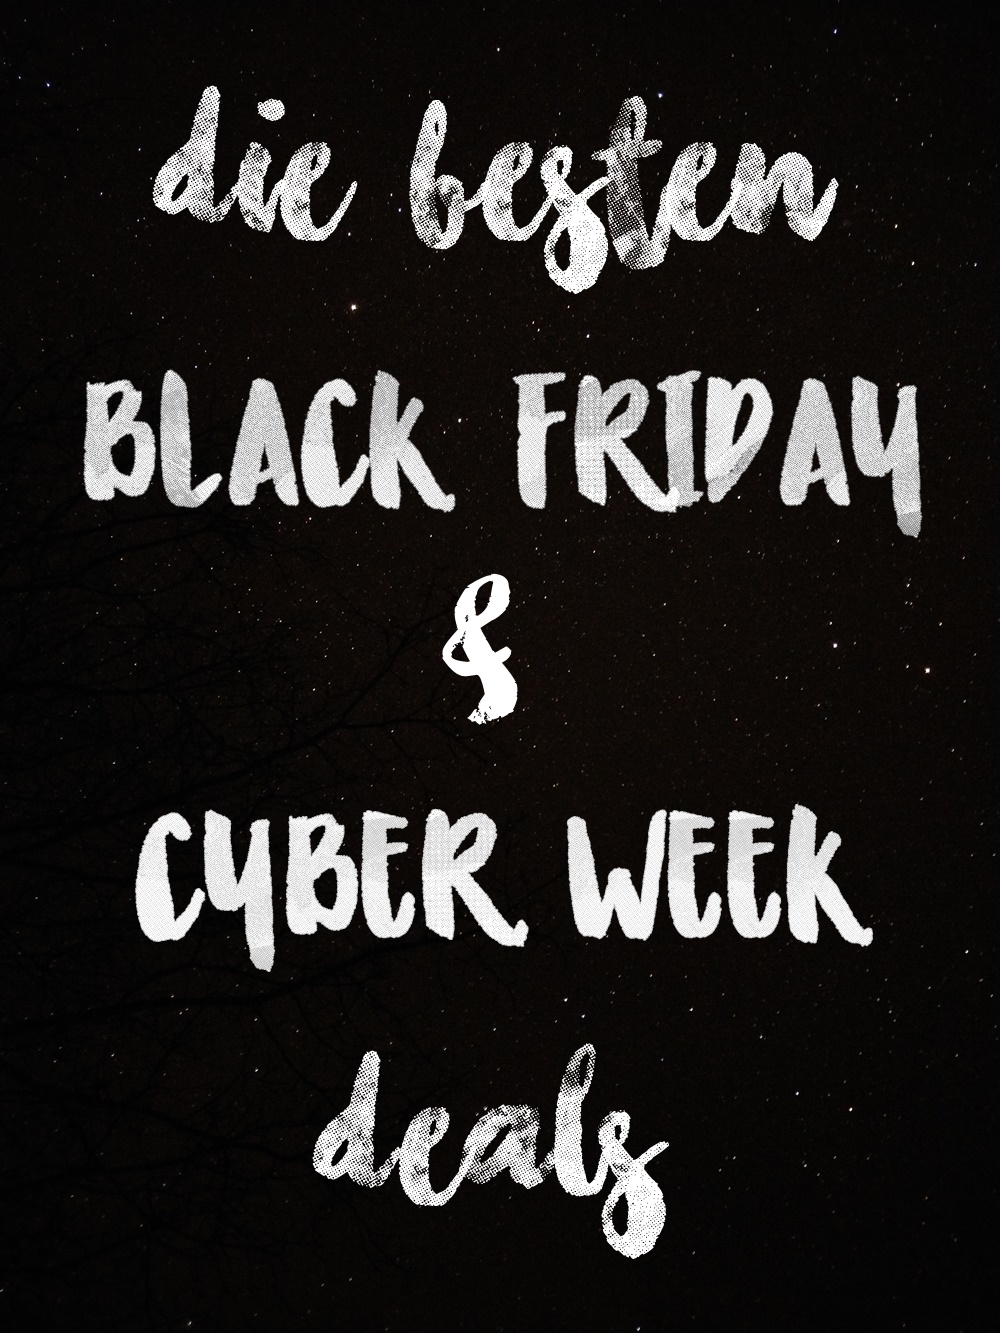 Die besten Black Friday & Cyber Week Deals 2019